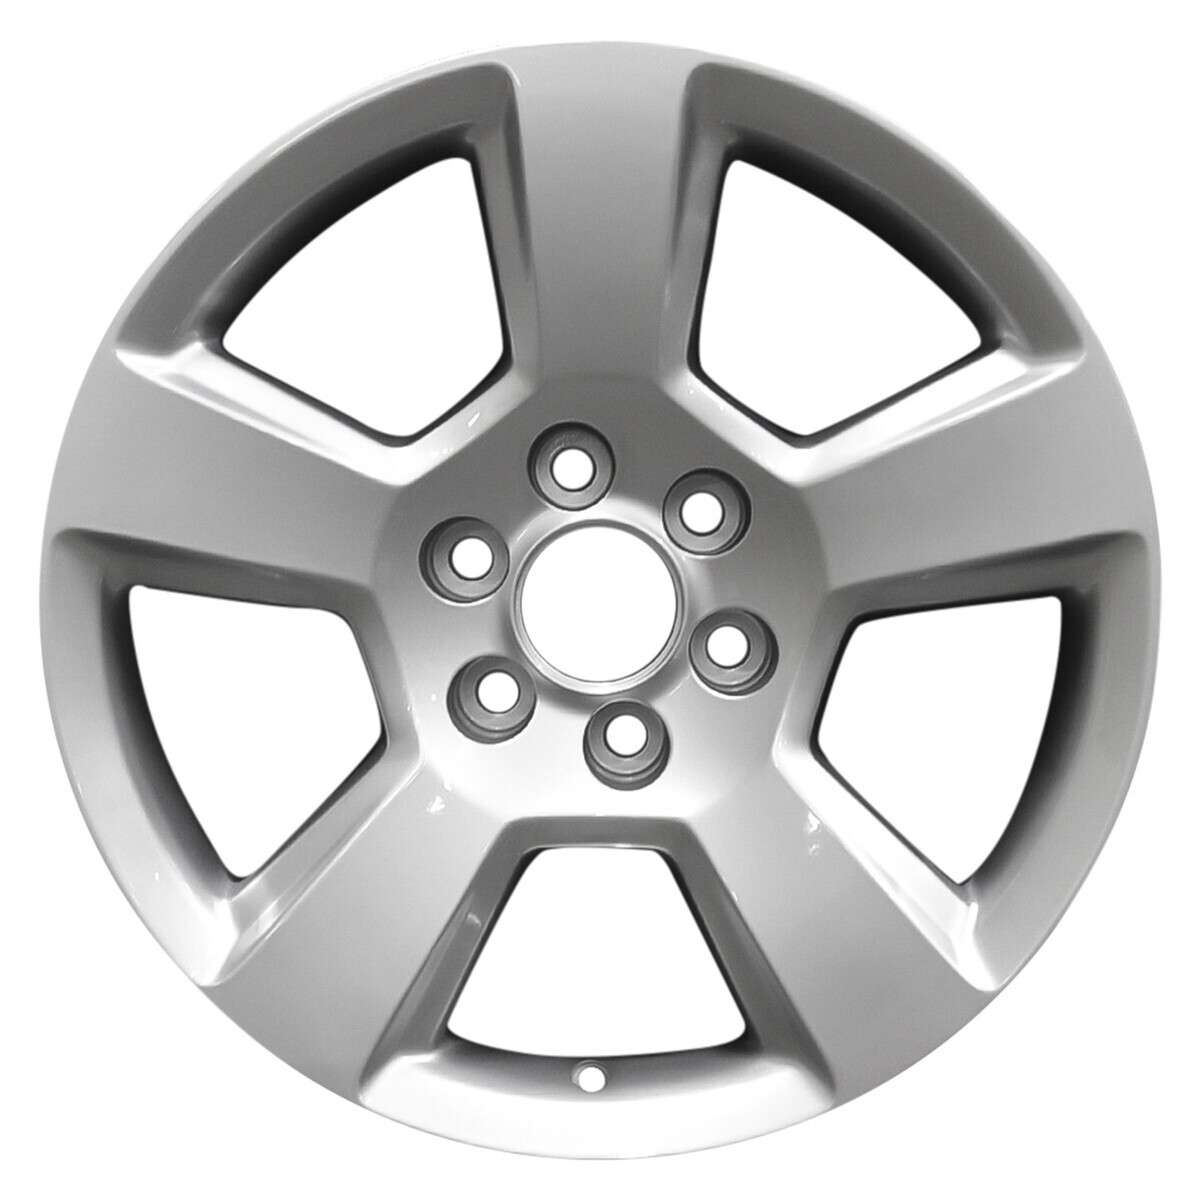 2021 GMC Yukon XL New 20" Replacement Wheel Rim RW5754S